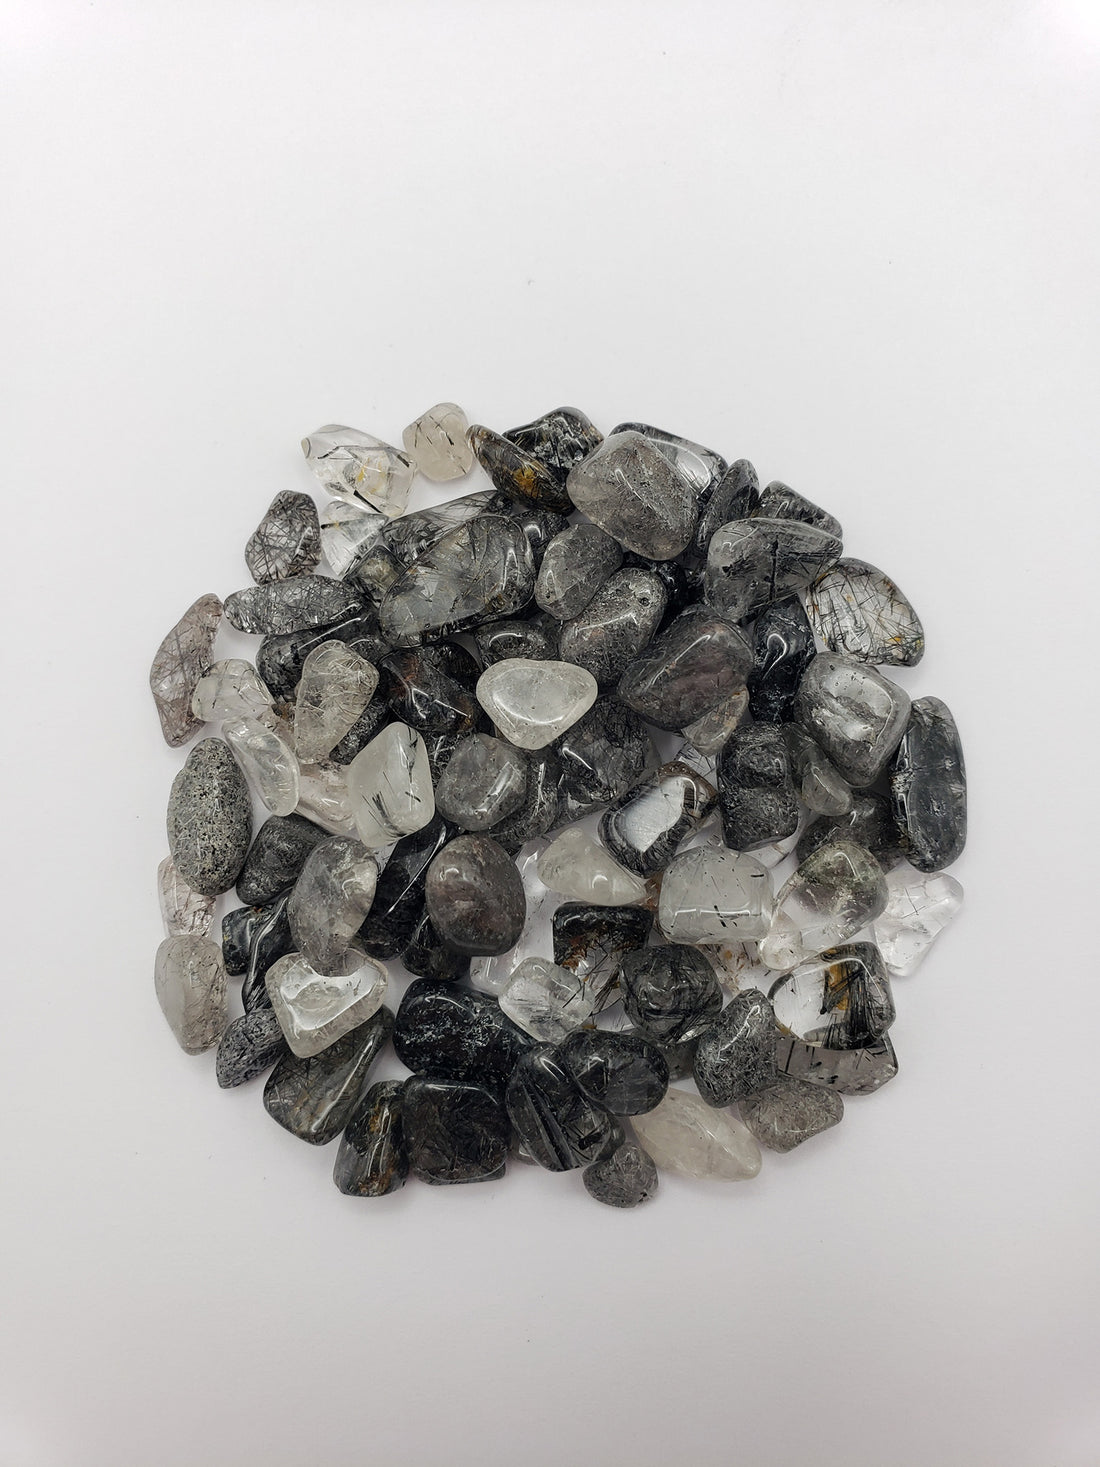 1 ounce of black tourmaline rutilated quartz on white background